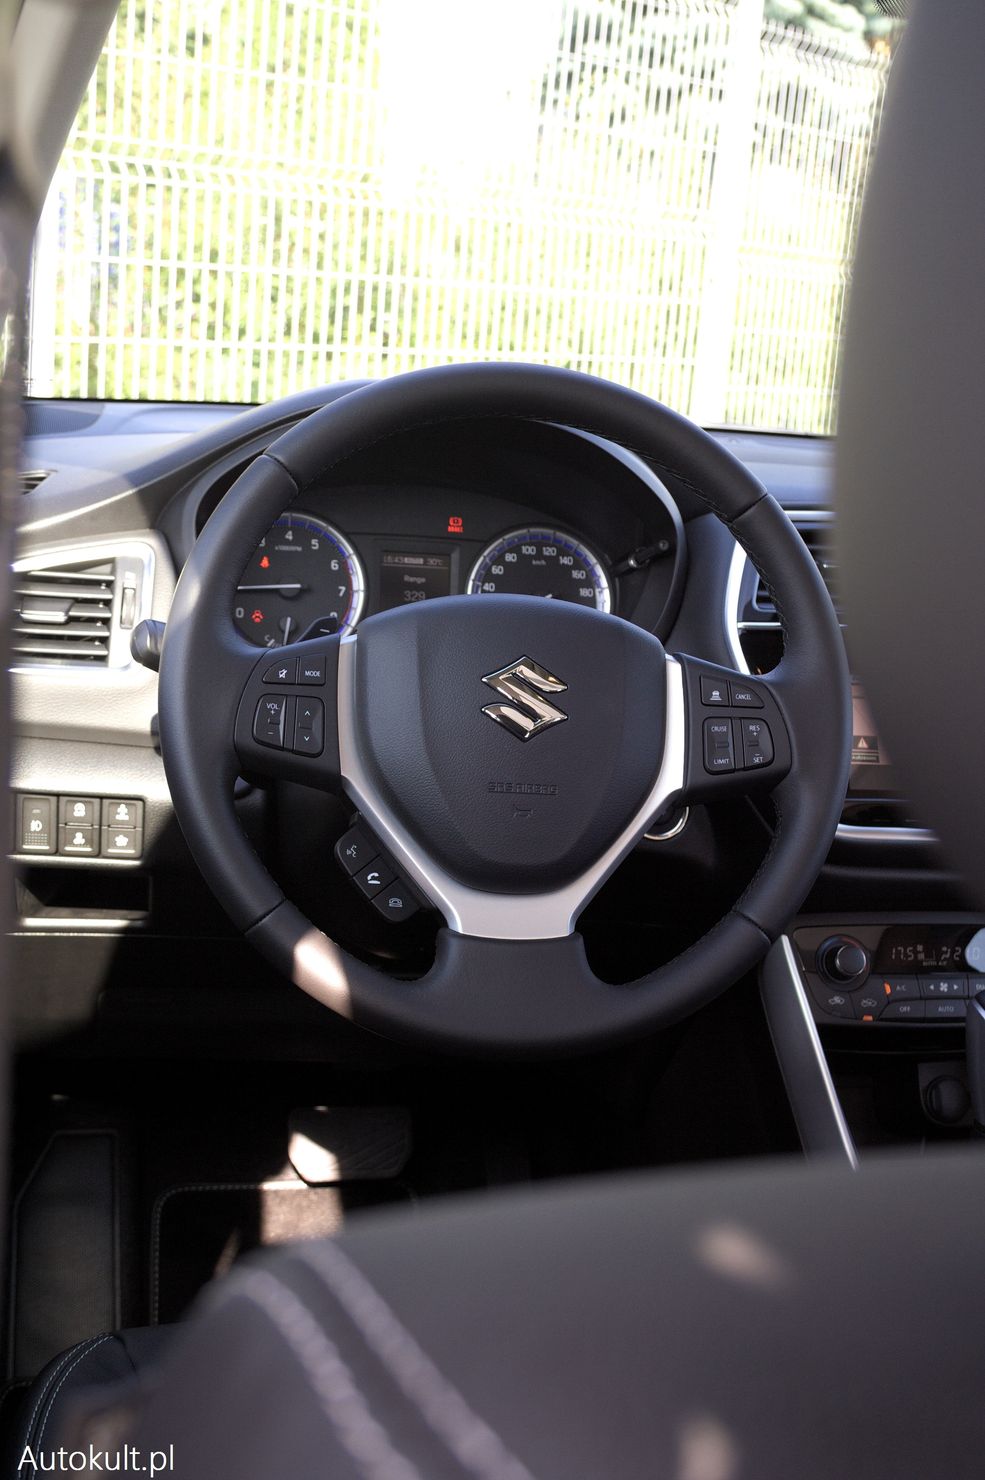 Suzuki SX4 SCross 1,4 140 KM BoosterJet 2016 test opinia